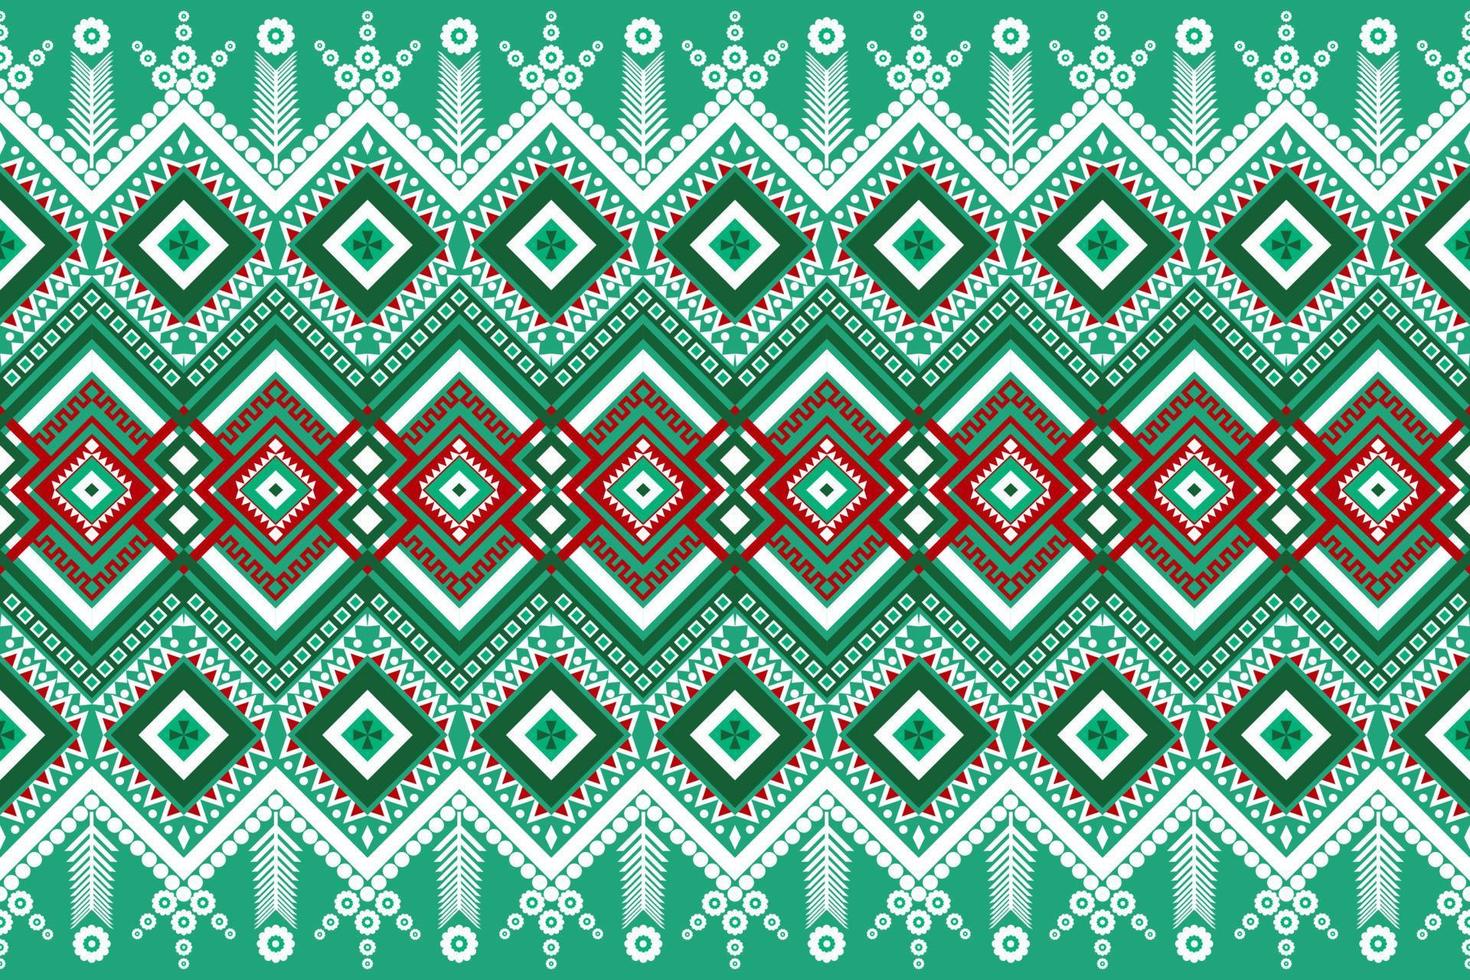 fondo de textura de alfombra verde 3409554 Foto de stock en Vecteezy